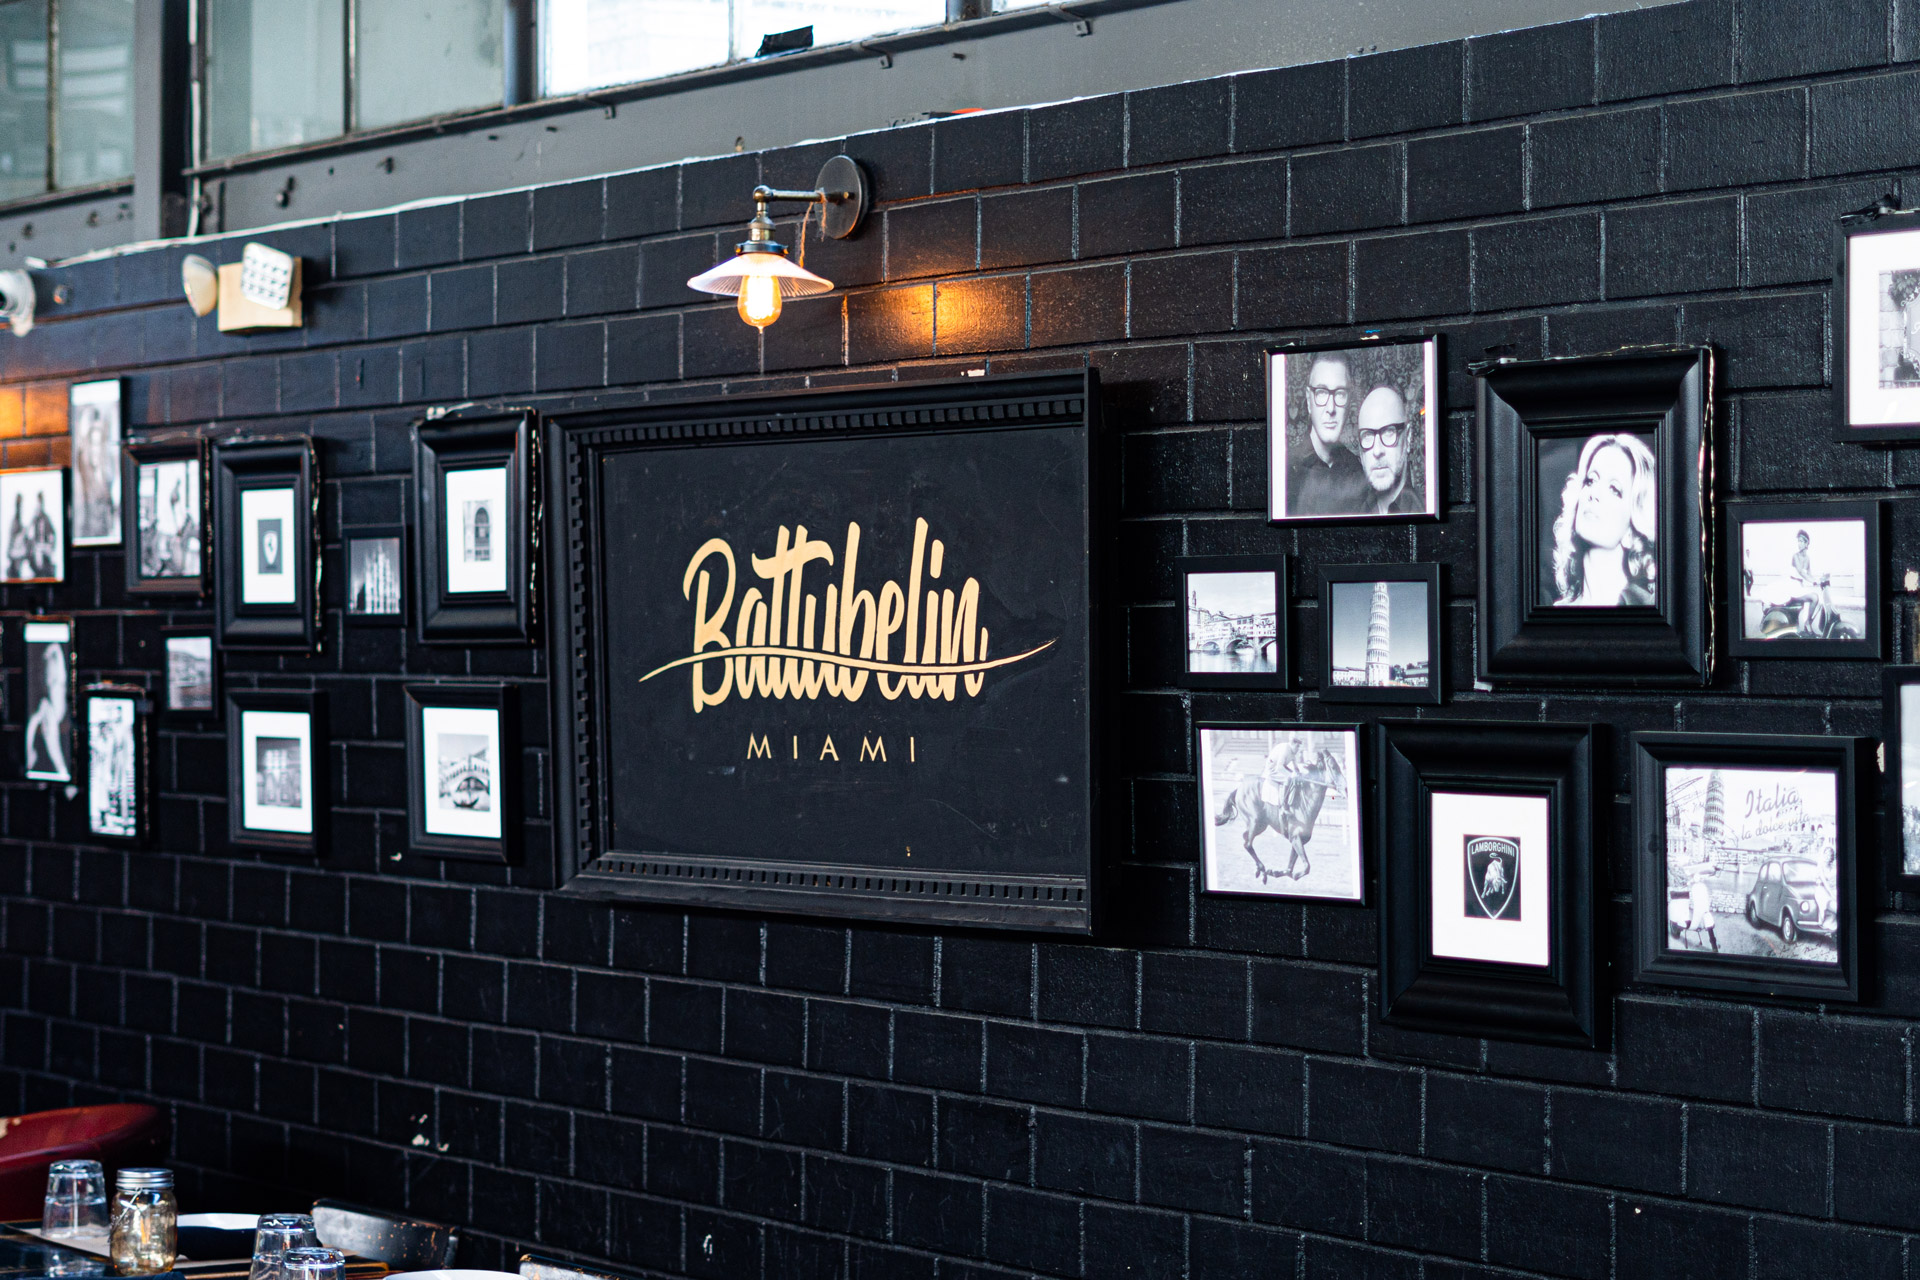 wall of the Battubelin restaurant